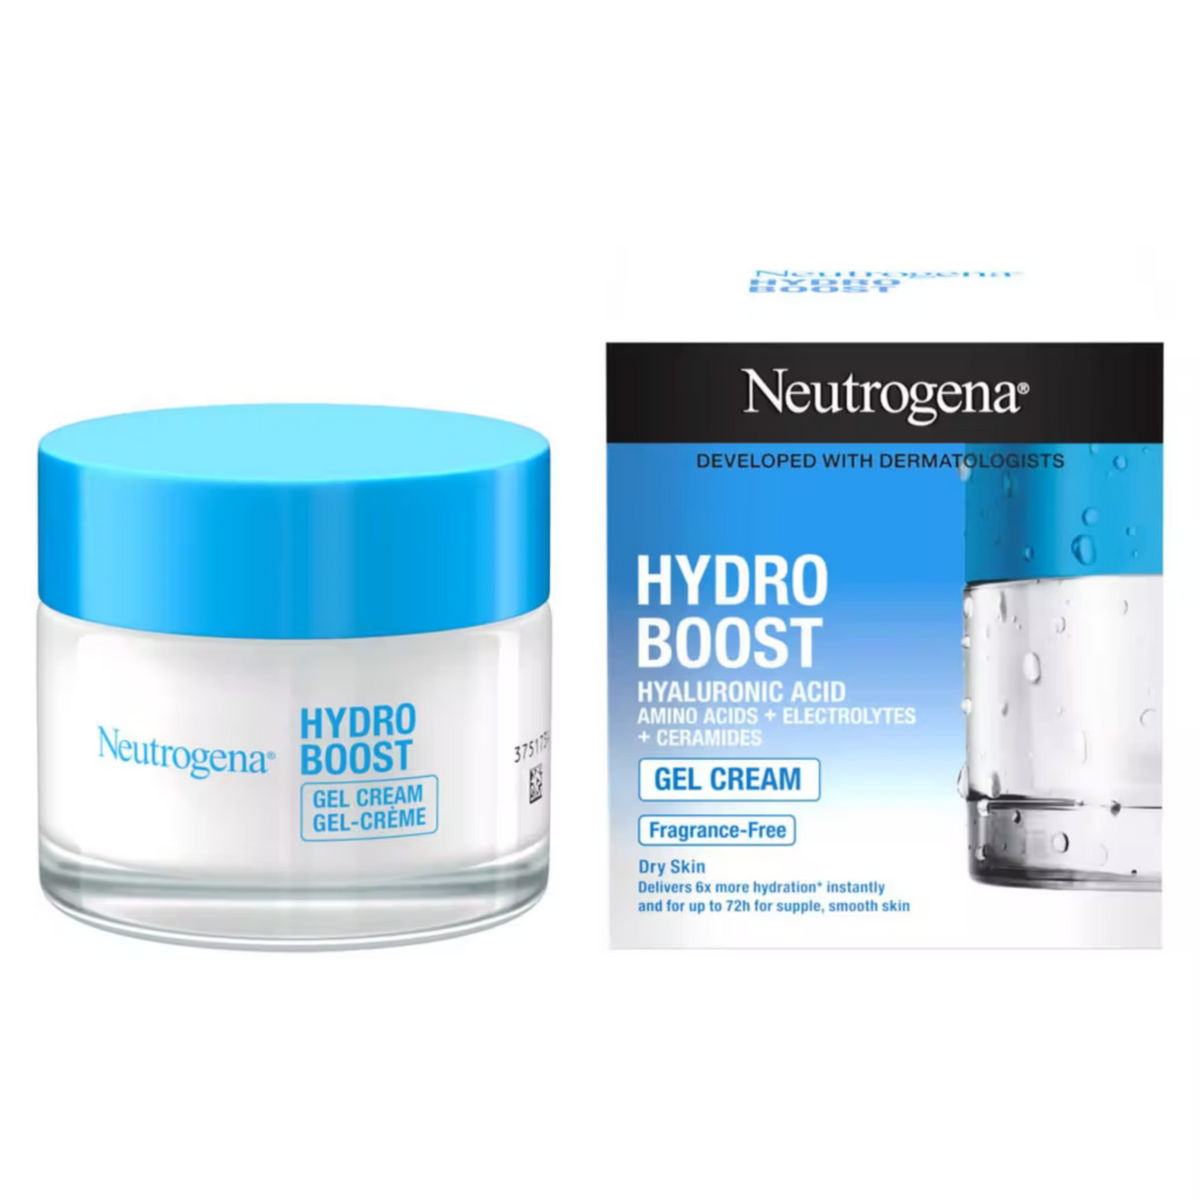 Hydro Boost Gel-Cream Moisturizer